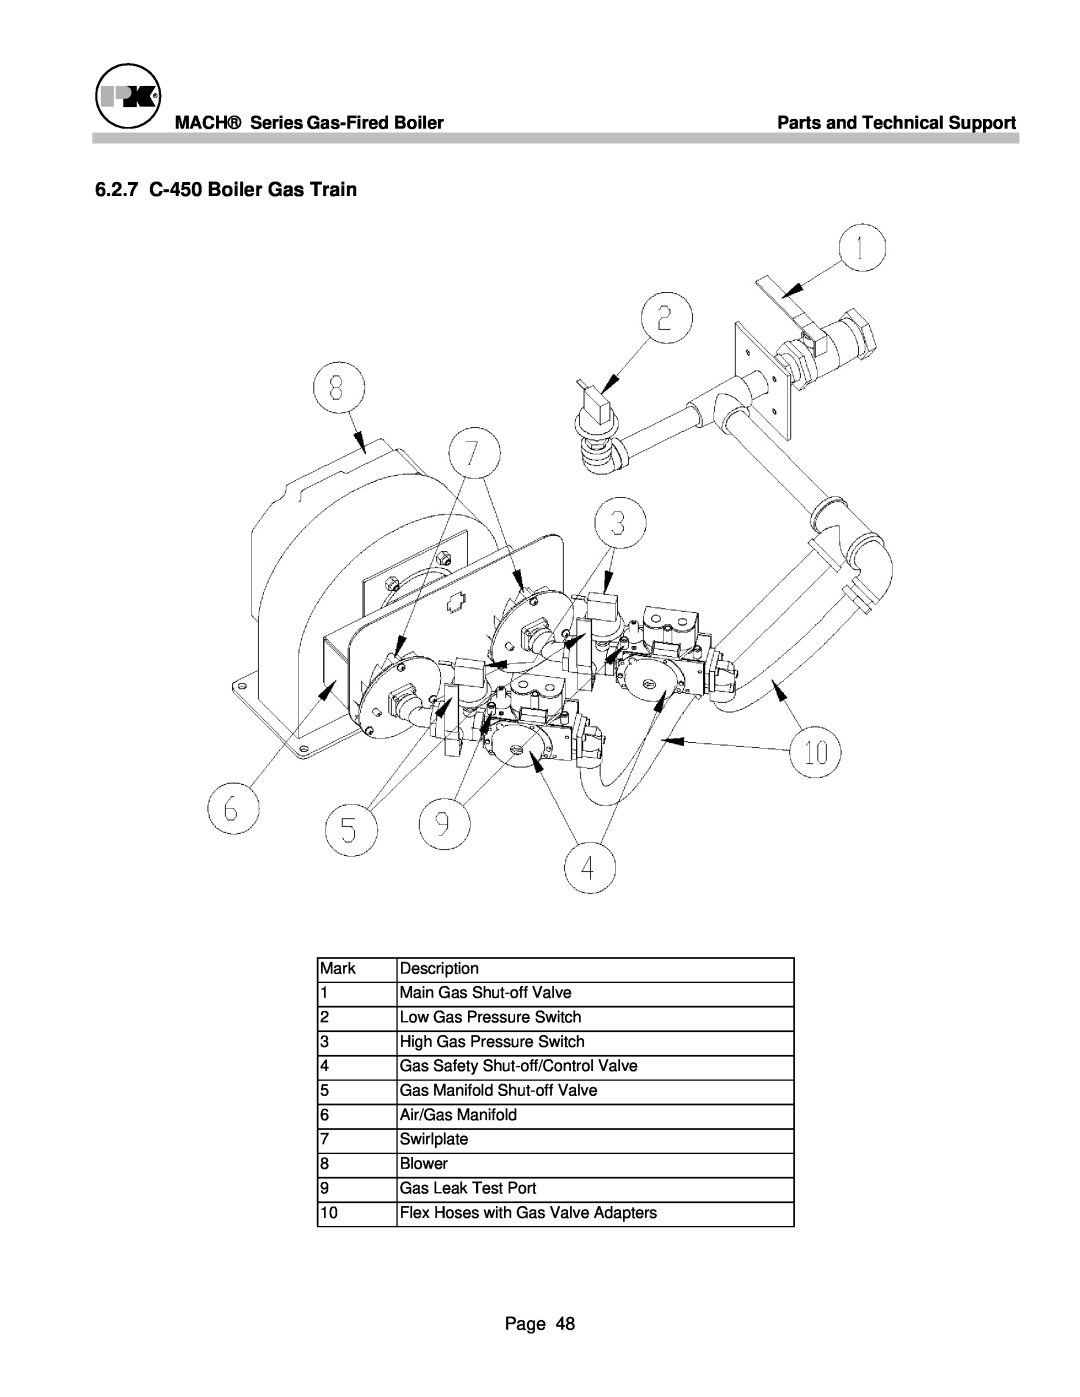 Patterson-Kelley MACH-05 manual 6.2.7 C-450Boiler Gas Train 